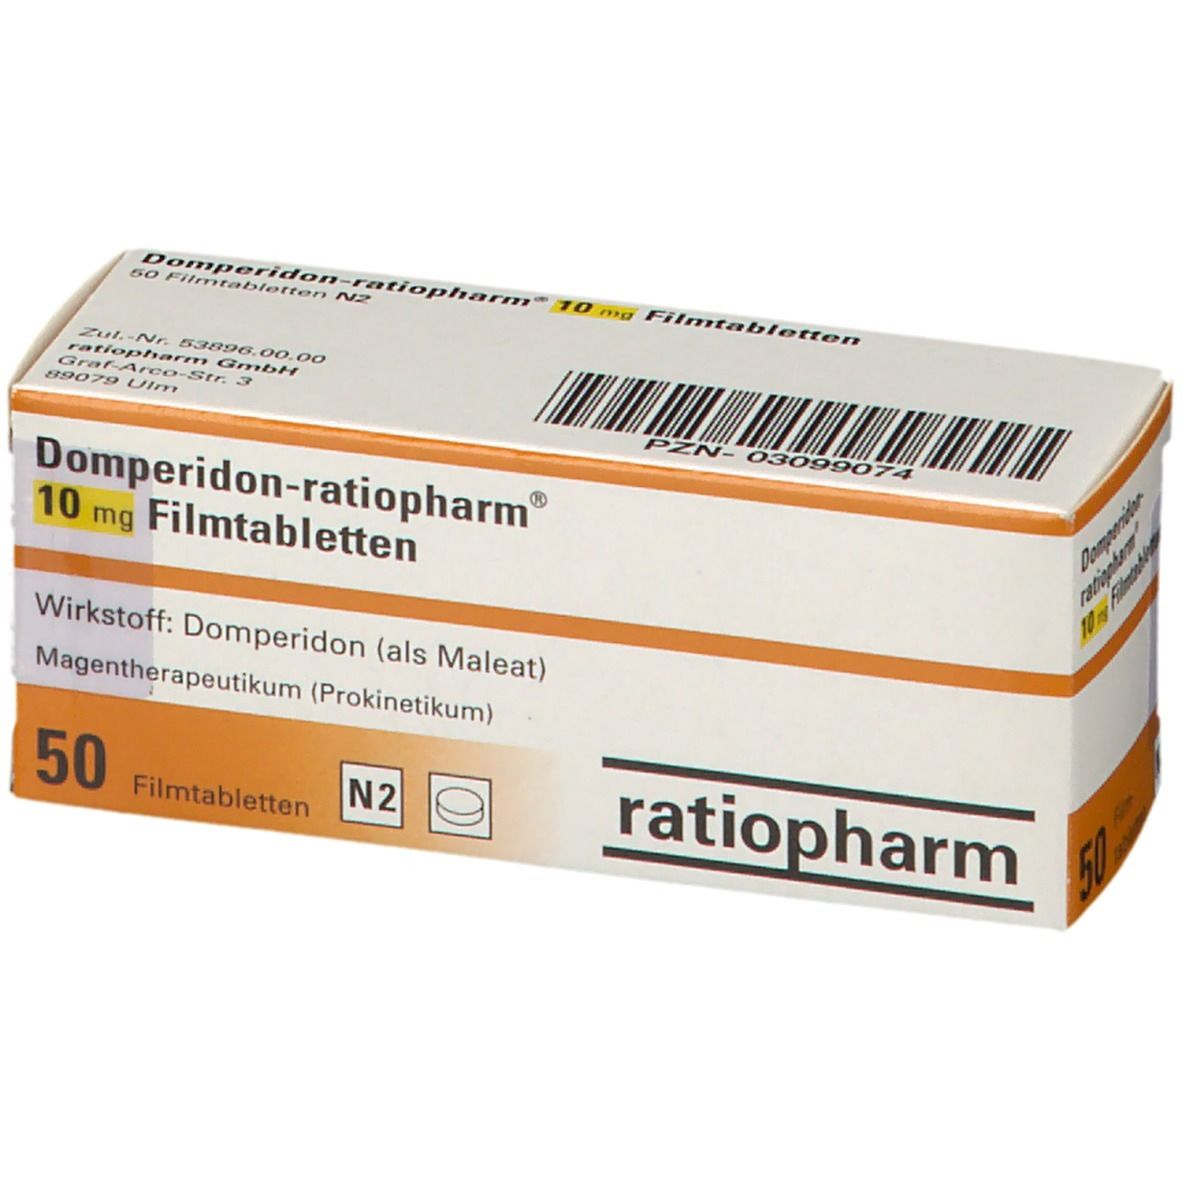 Domperidon-ratiopharm® 10 mg